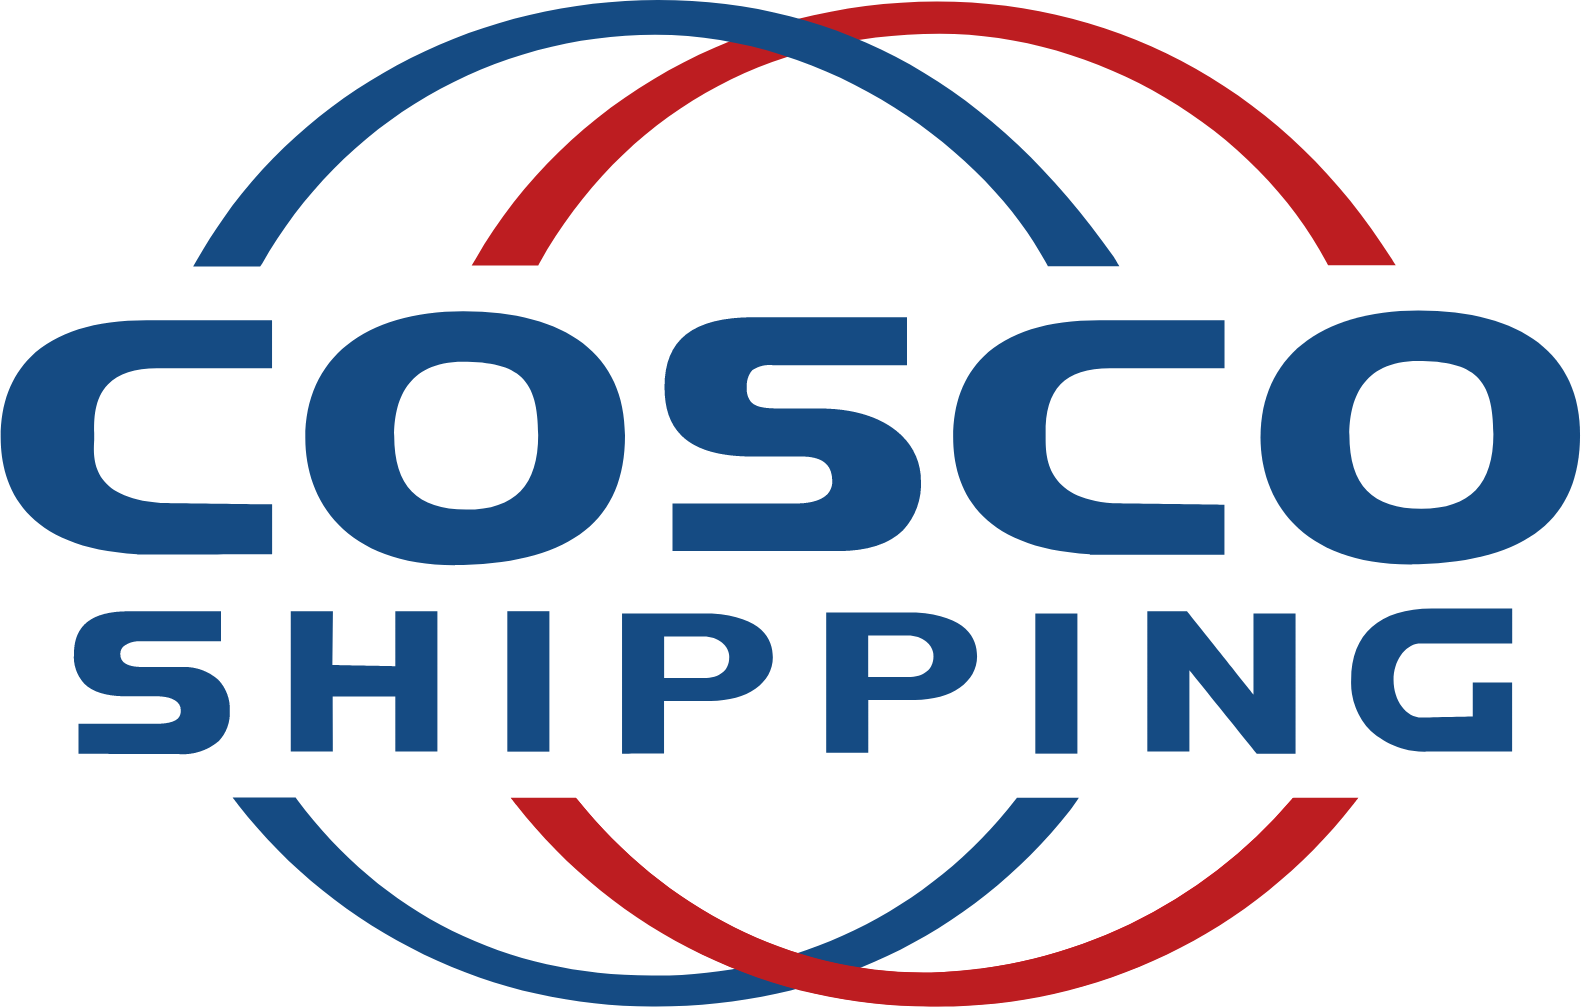 COSCO Shipping logo (transparent PNG)